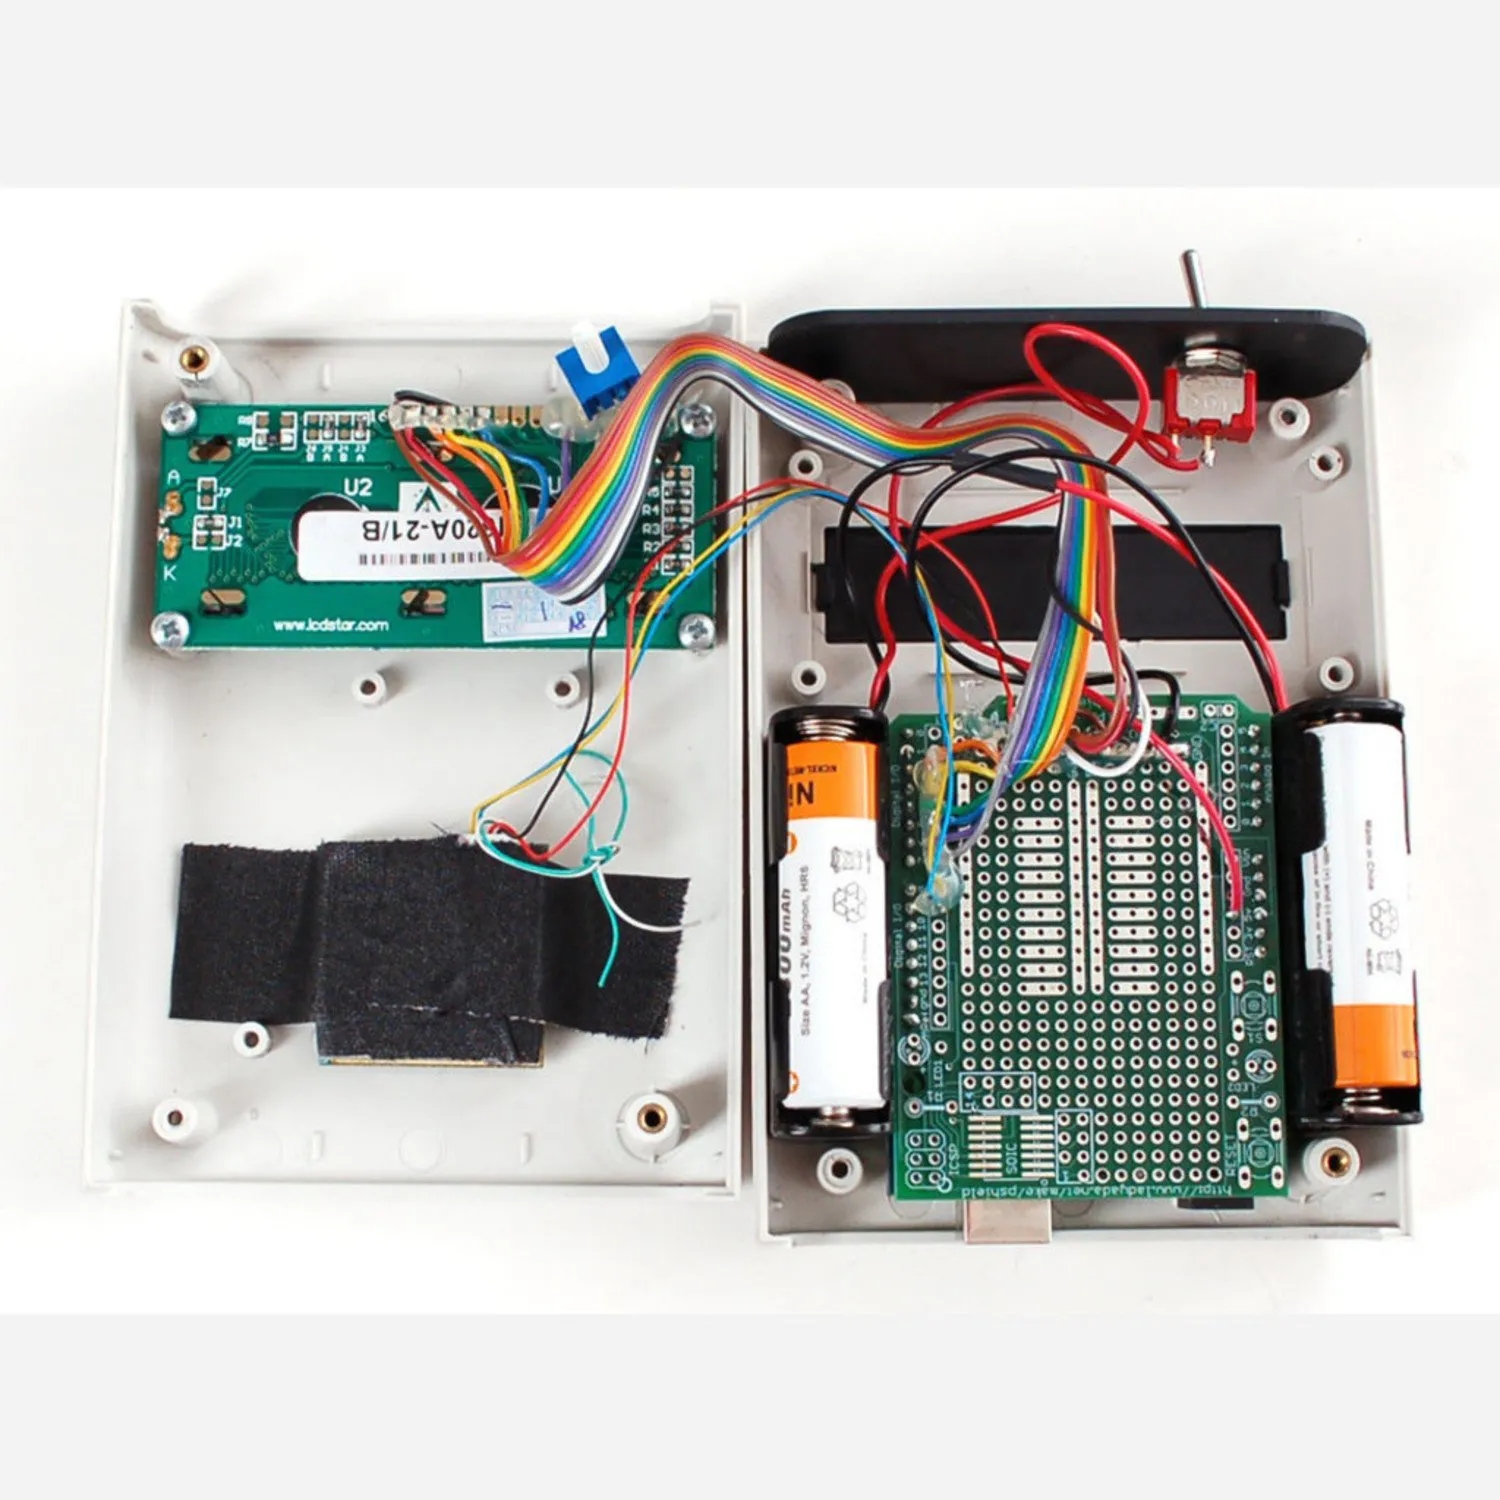 Photo of White Enclosure for Arduino - Electronics enclosure [1.0]